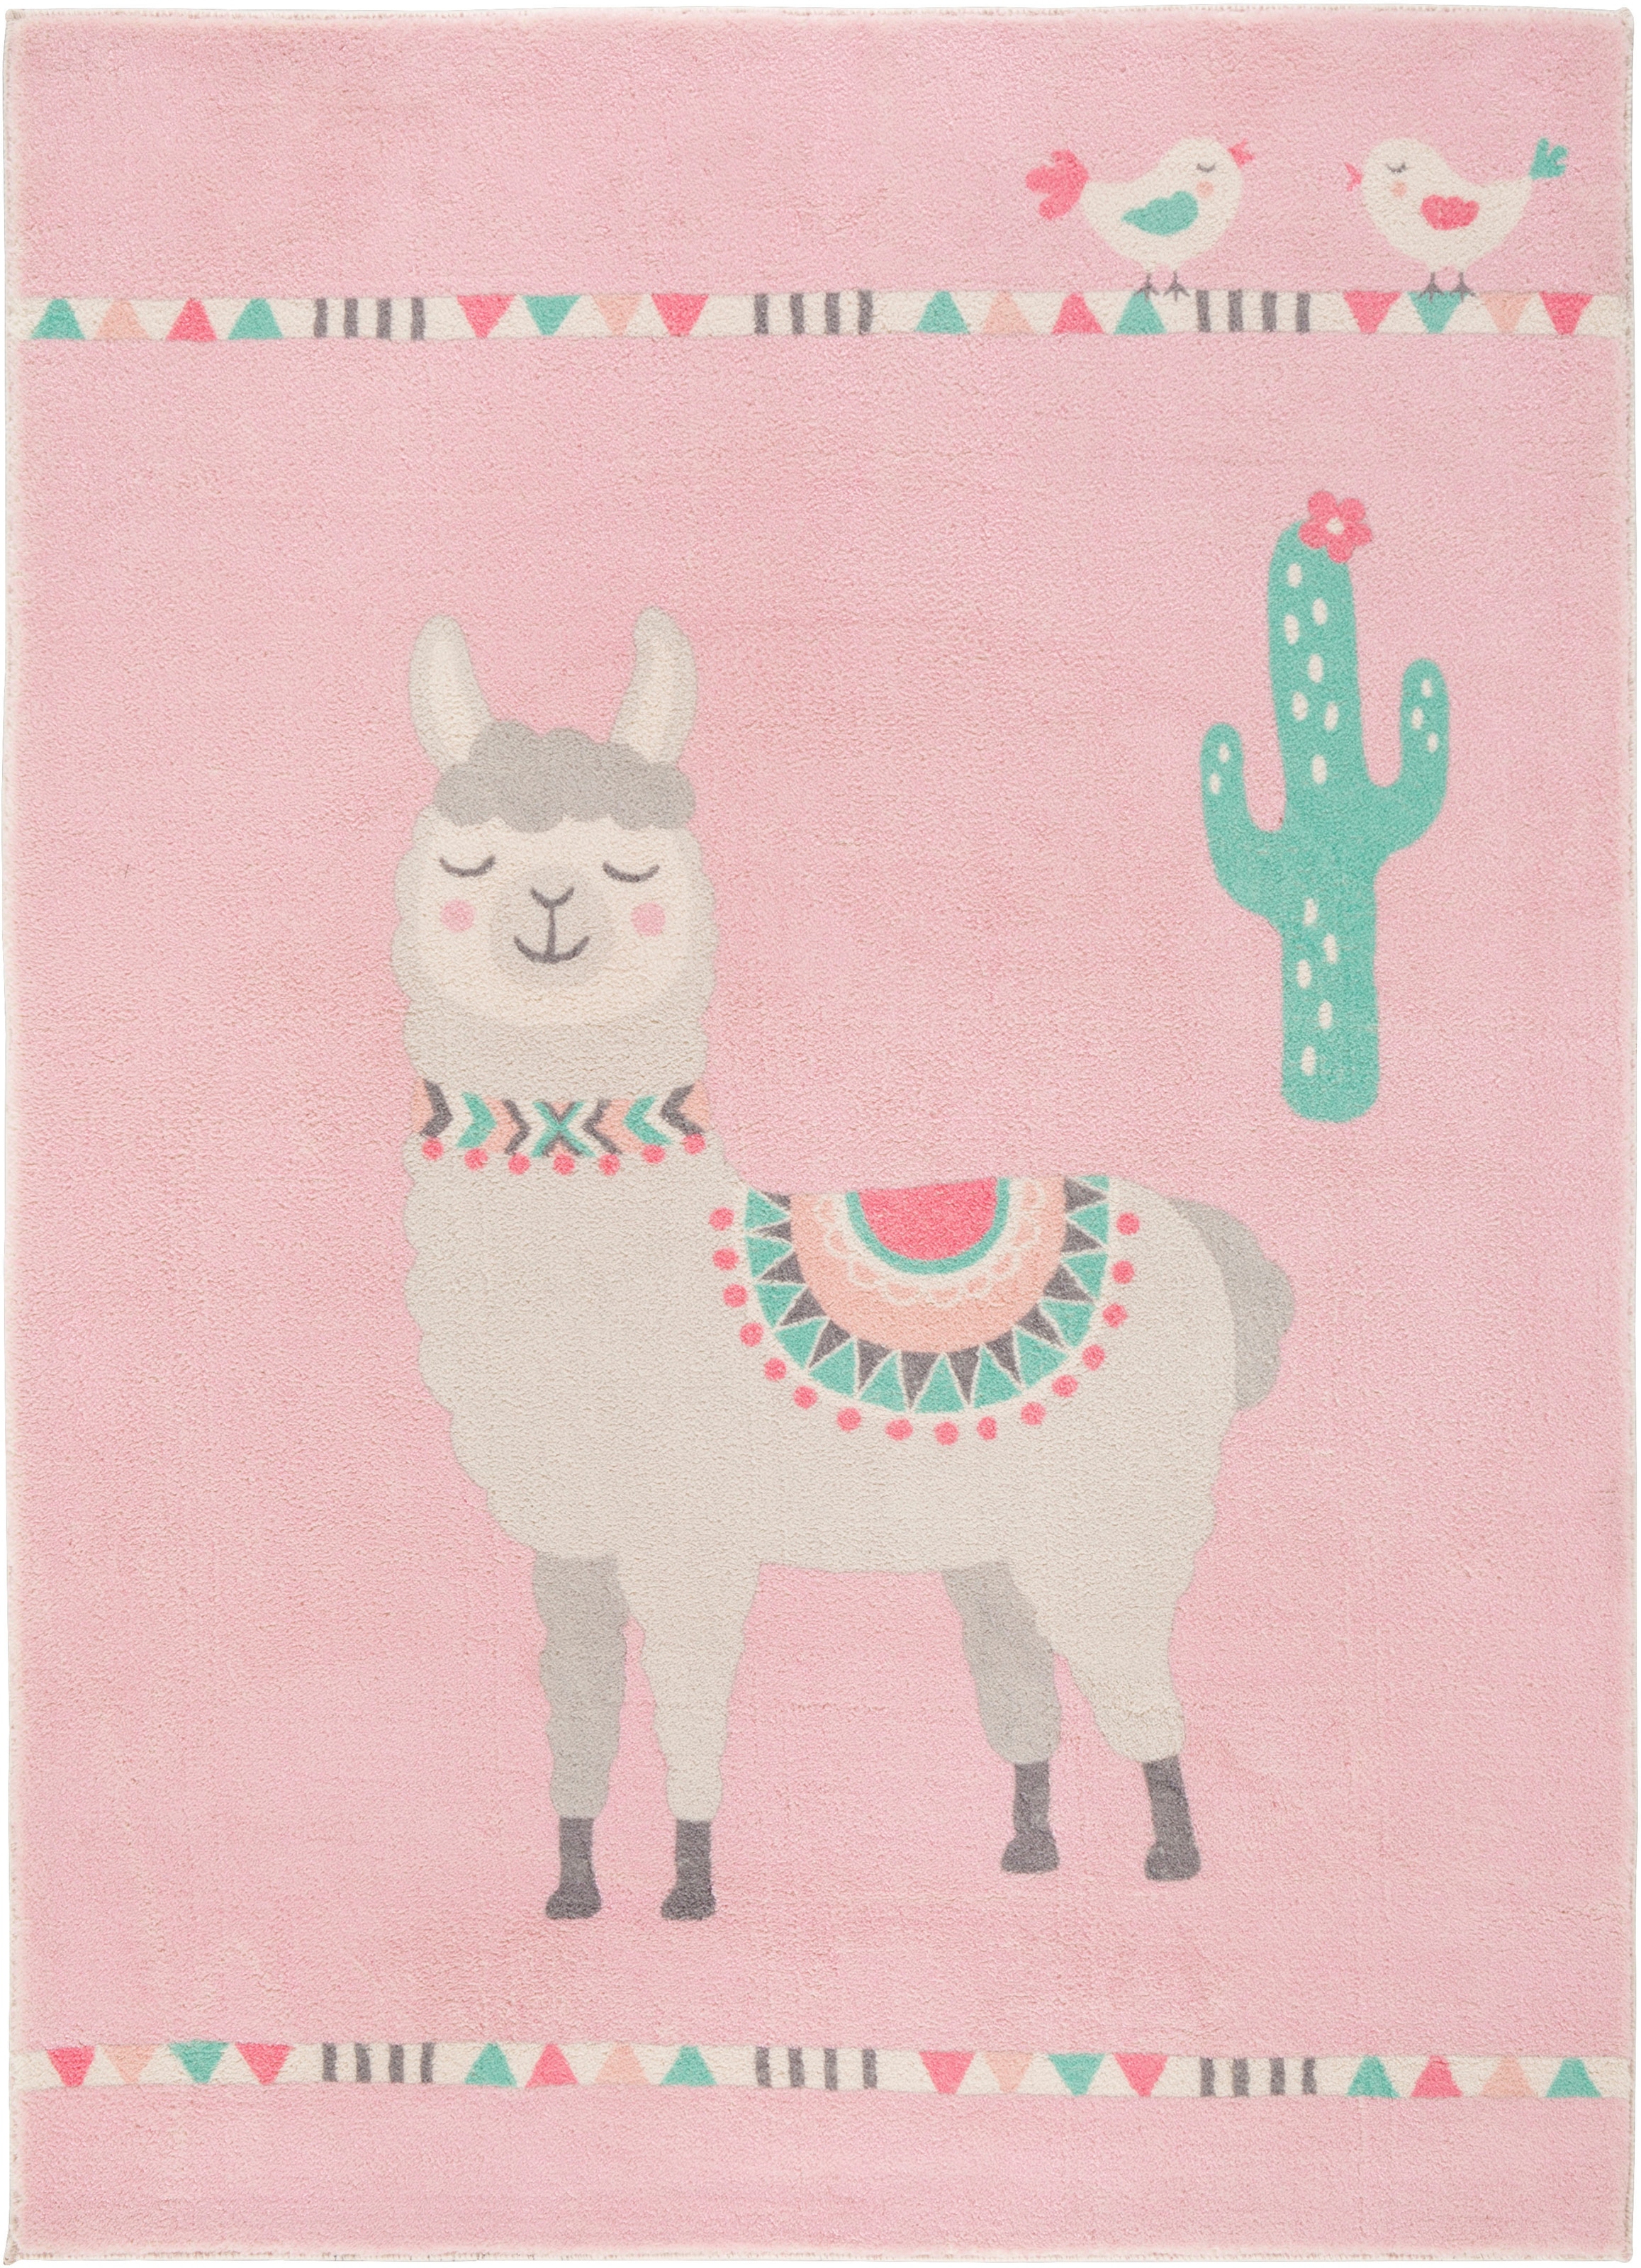 Kinderteppich »Lama Lulu«, rechteckig, Lama-Motiv, Pastell-Farben, Kinderzimmer